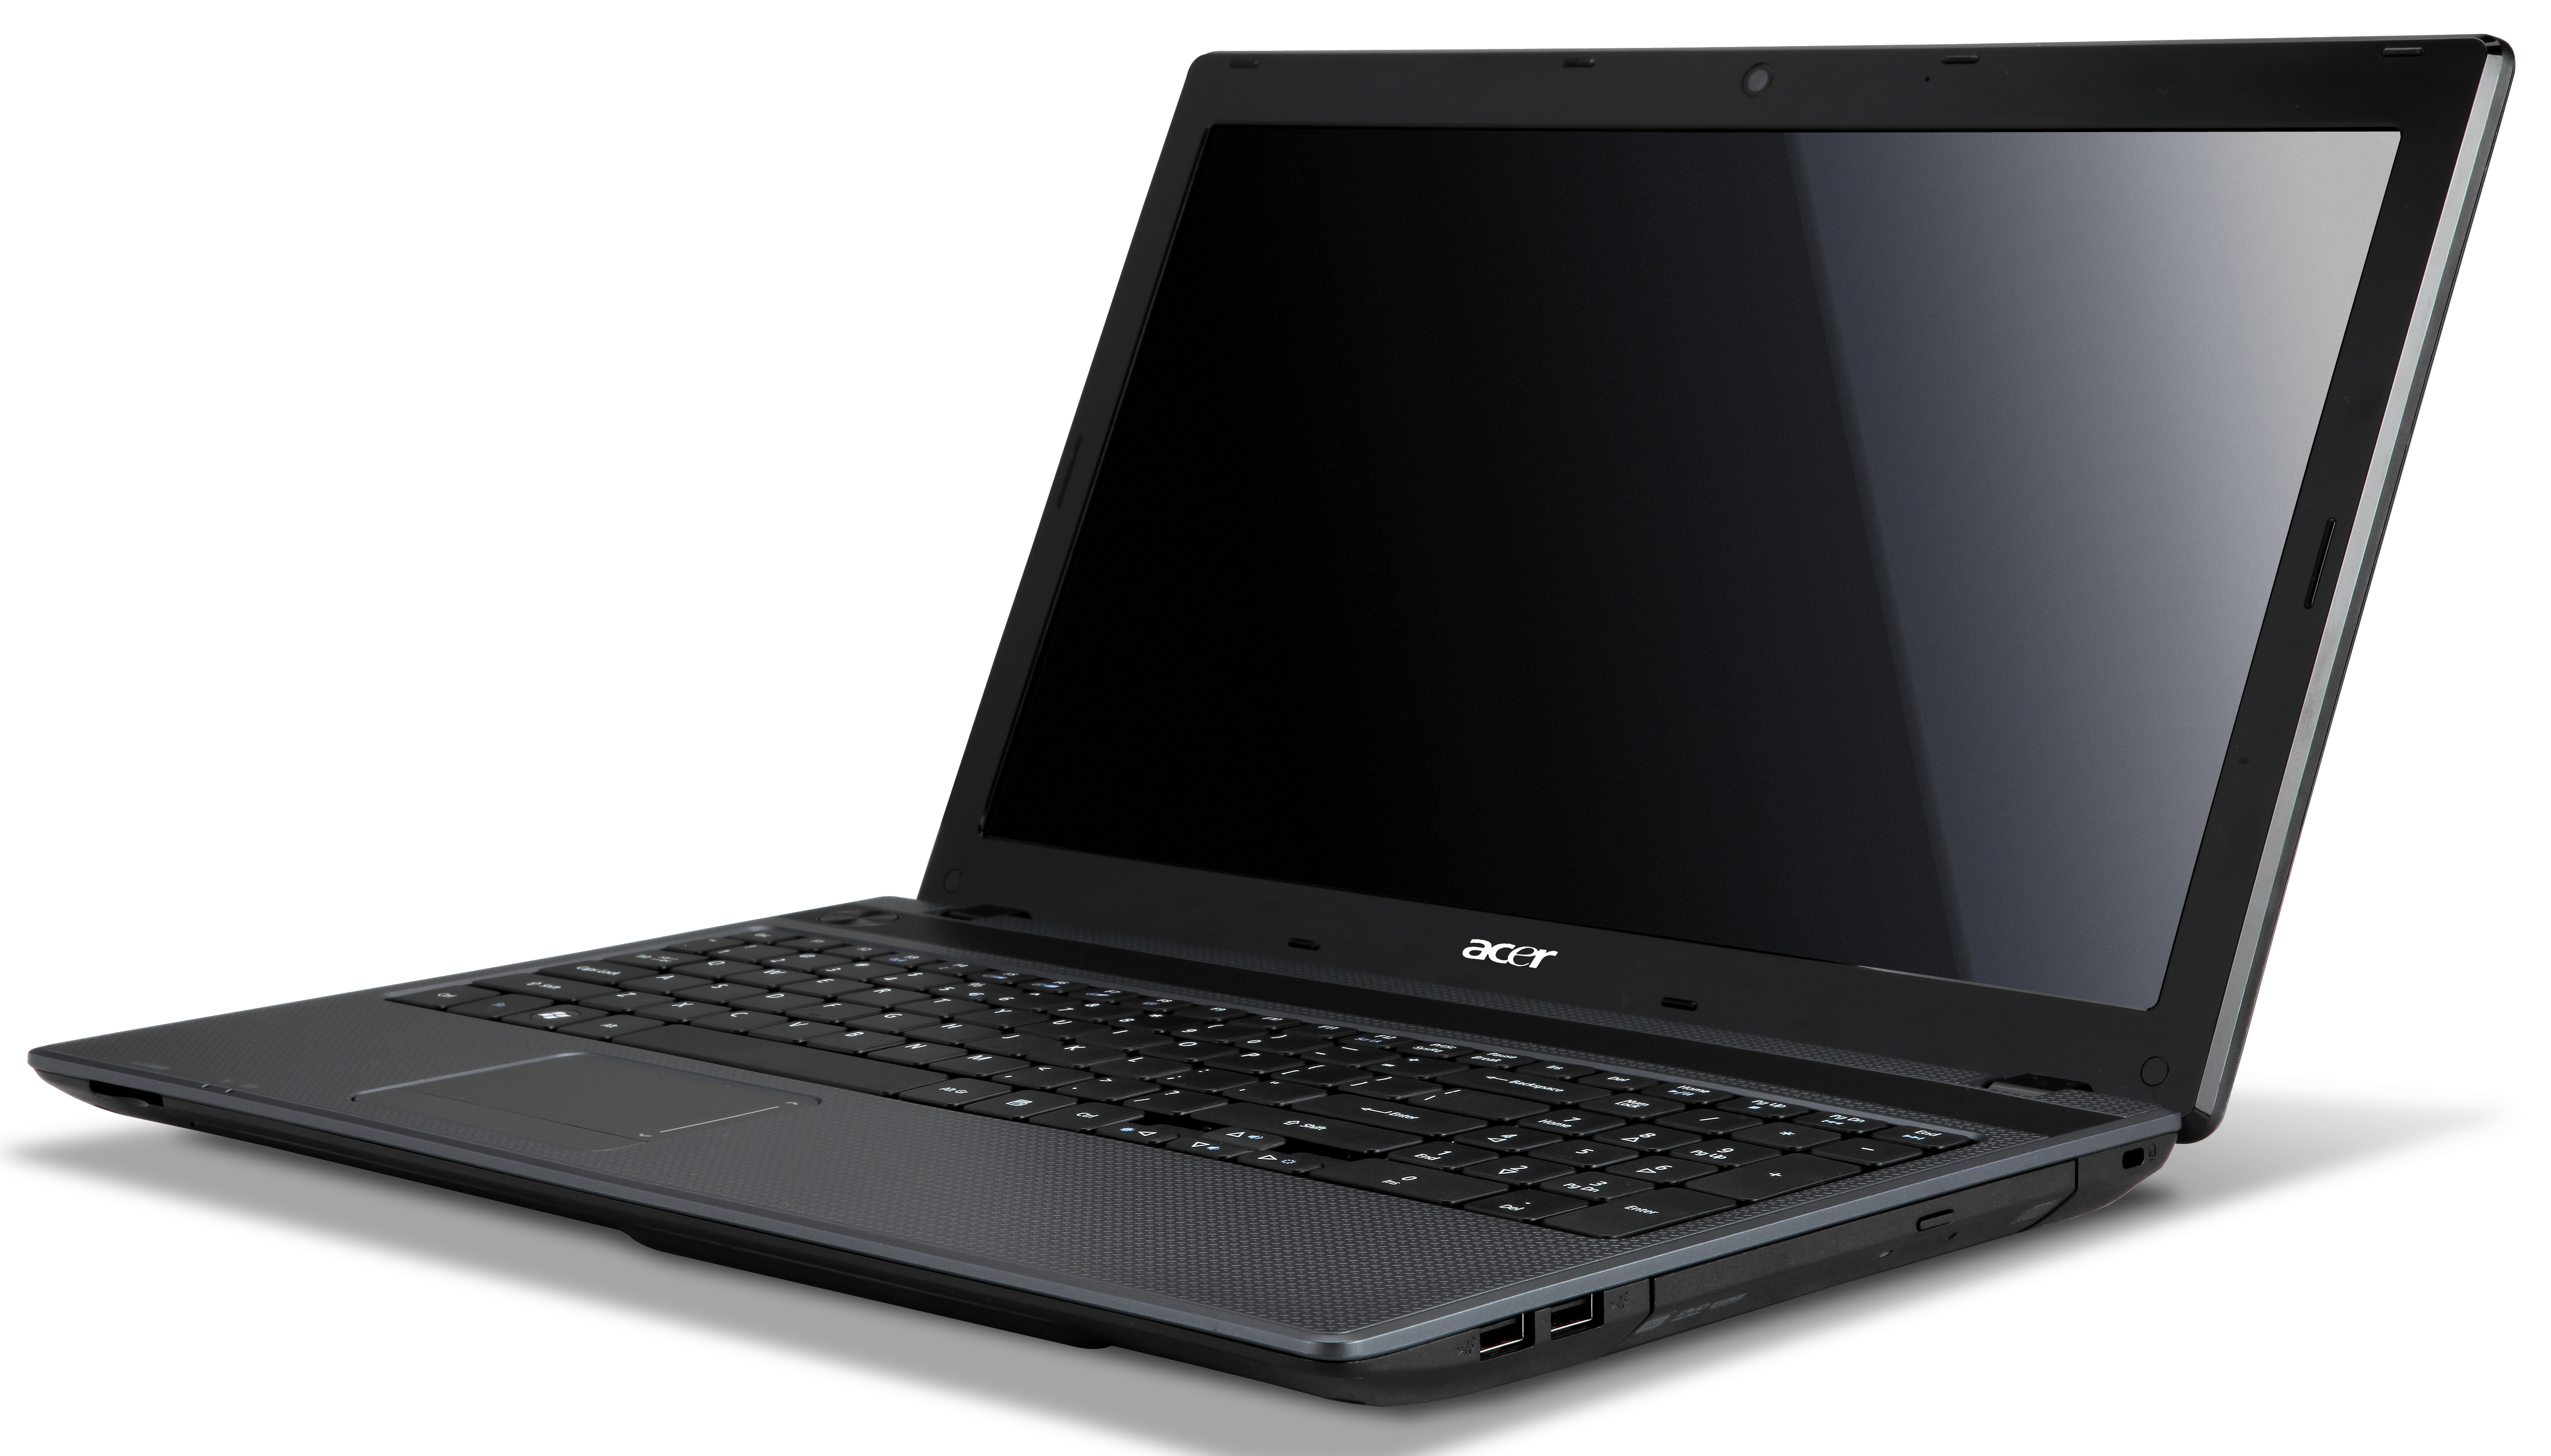 05 ру ноутбуки. Ноутбук Acer TRAVELMATE 5744-382g32mnkk. Acer Aspire 5733z. Ноутбук Acer Aspire 5349-b812g50mnkk. Acer 5733z p622g32.